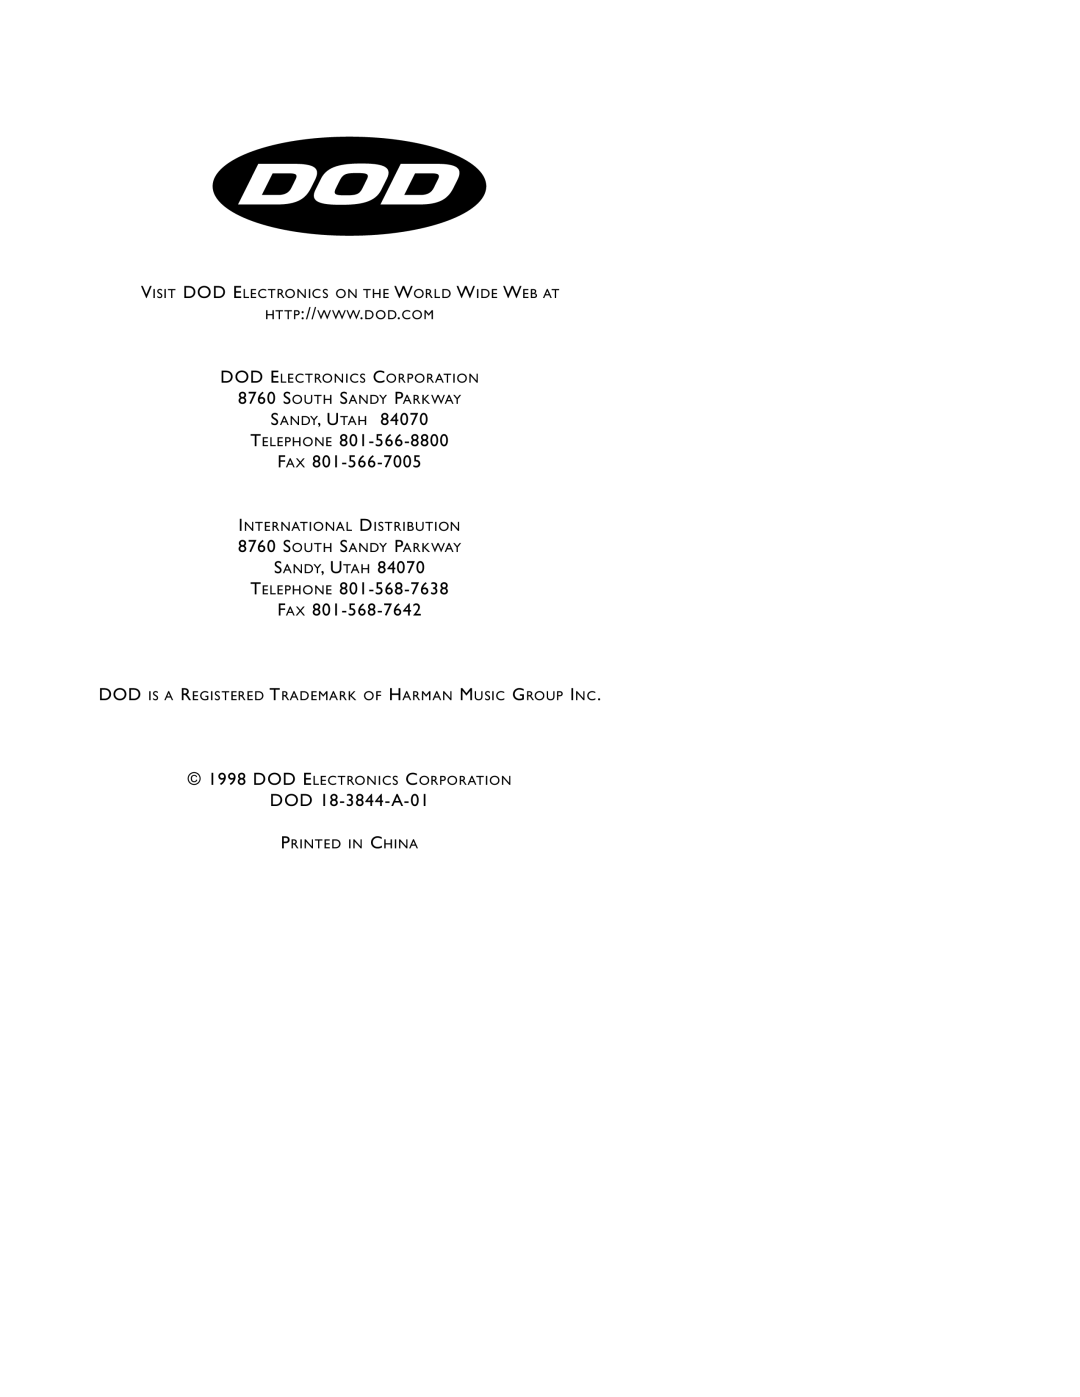 DOD SR835 Sandy, Utah Telephone Fax, DOD 18-3844-A-01, Visit Dod Electronics On The World Wide Web At, South Sandy Parkway 